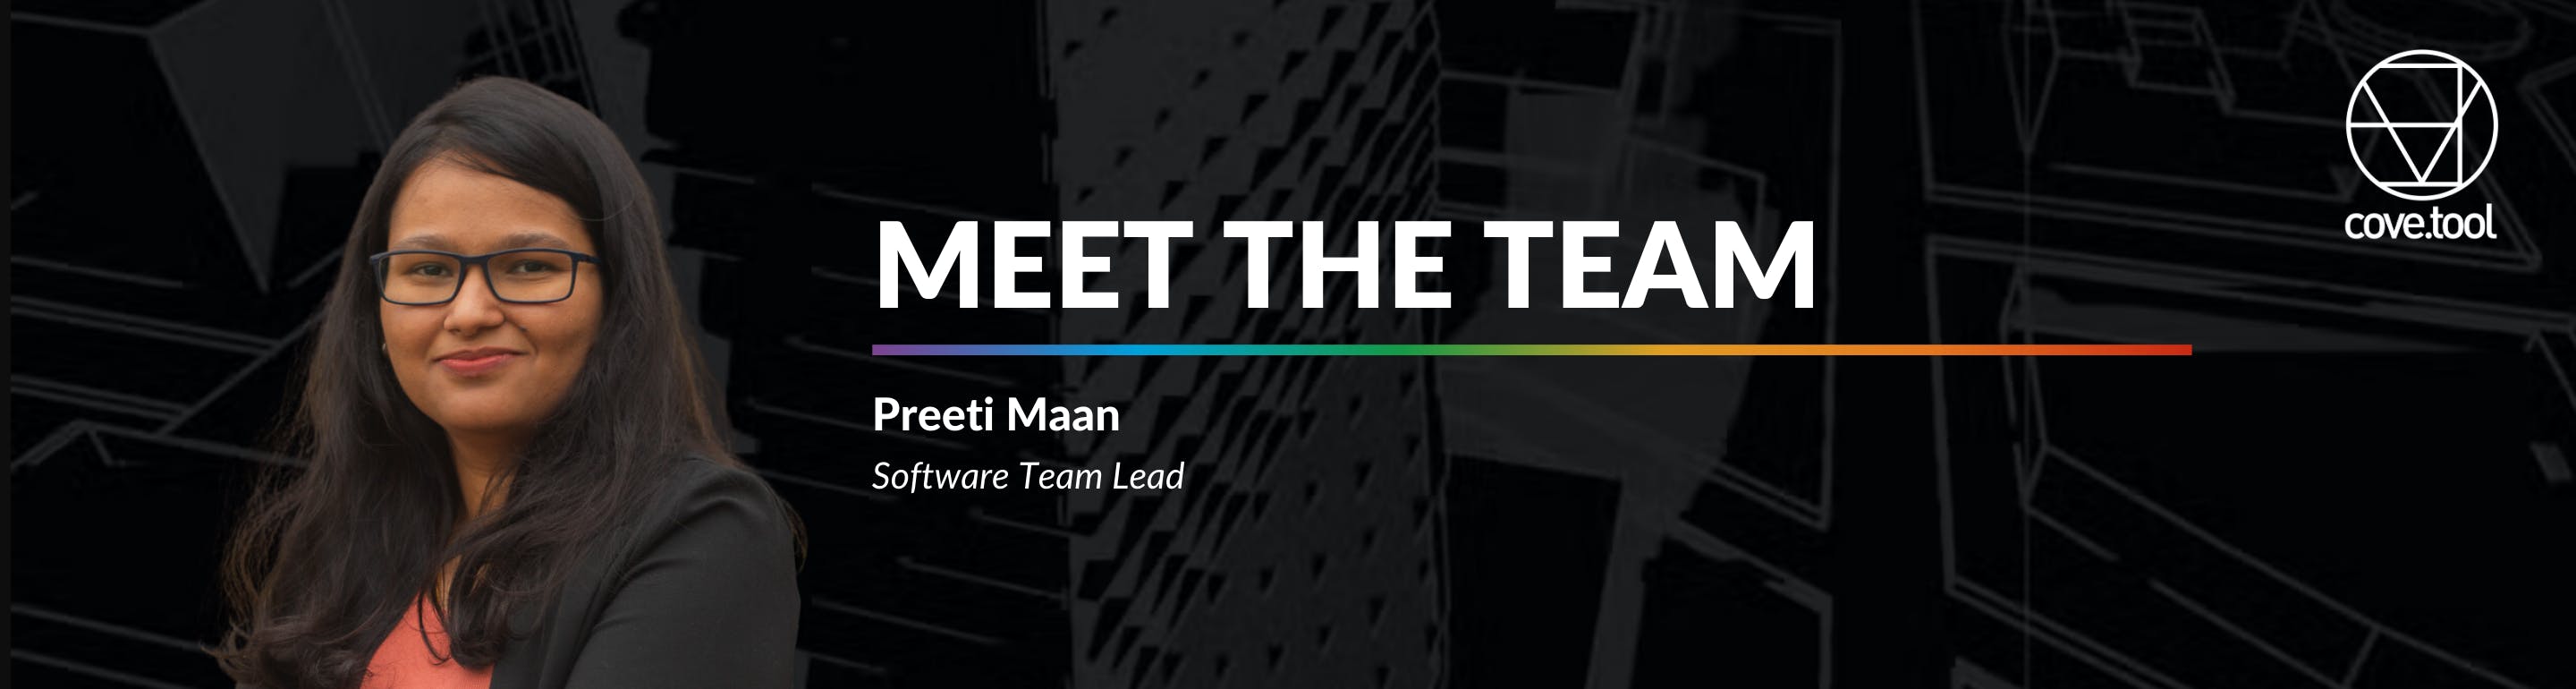 Meet one of our talented team members, Preeti Maan, cove.tool’s Software Team Lead. 